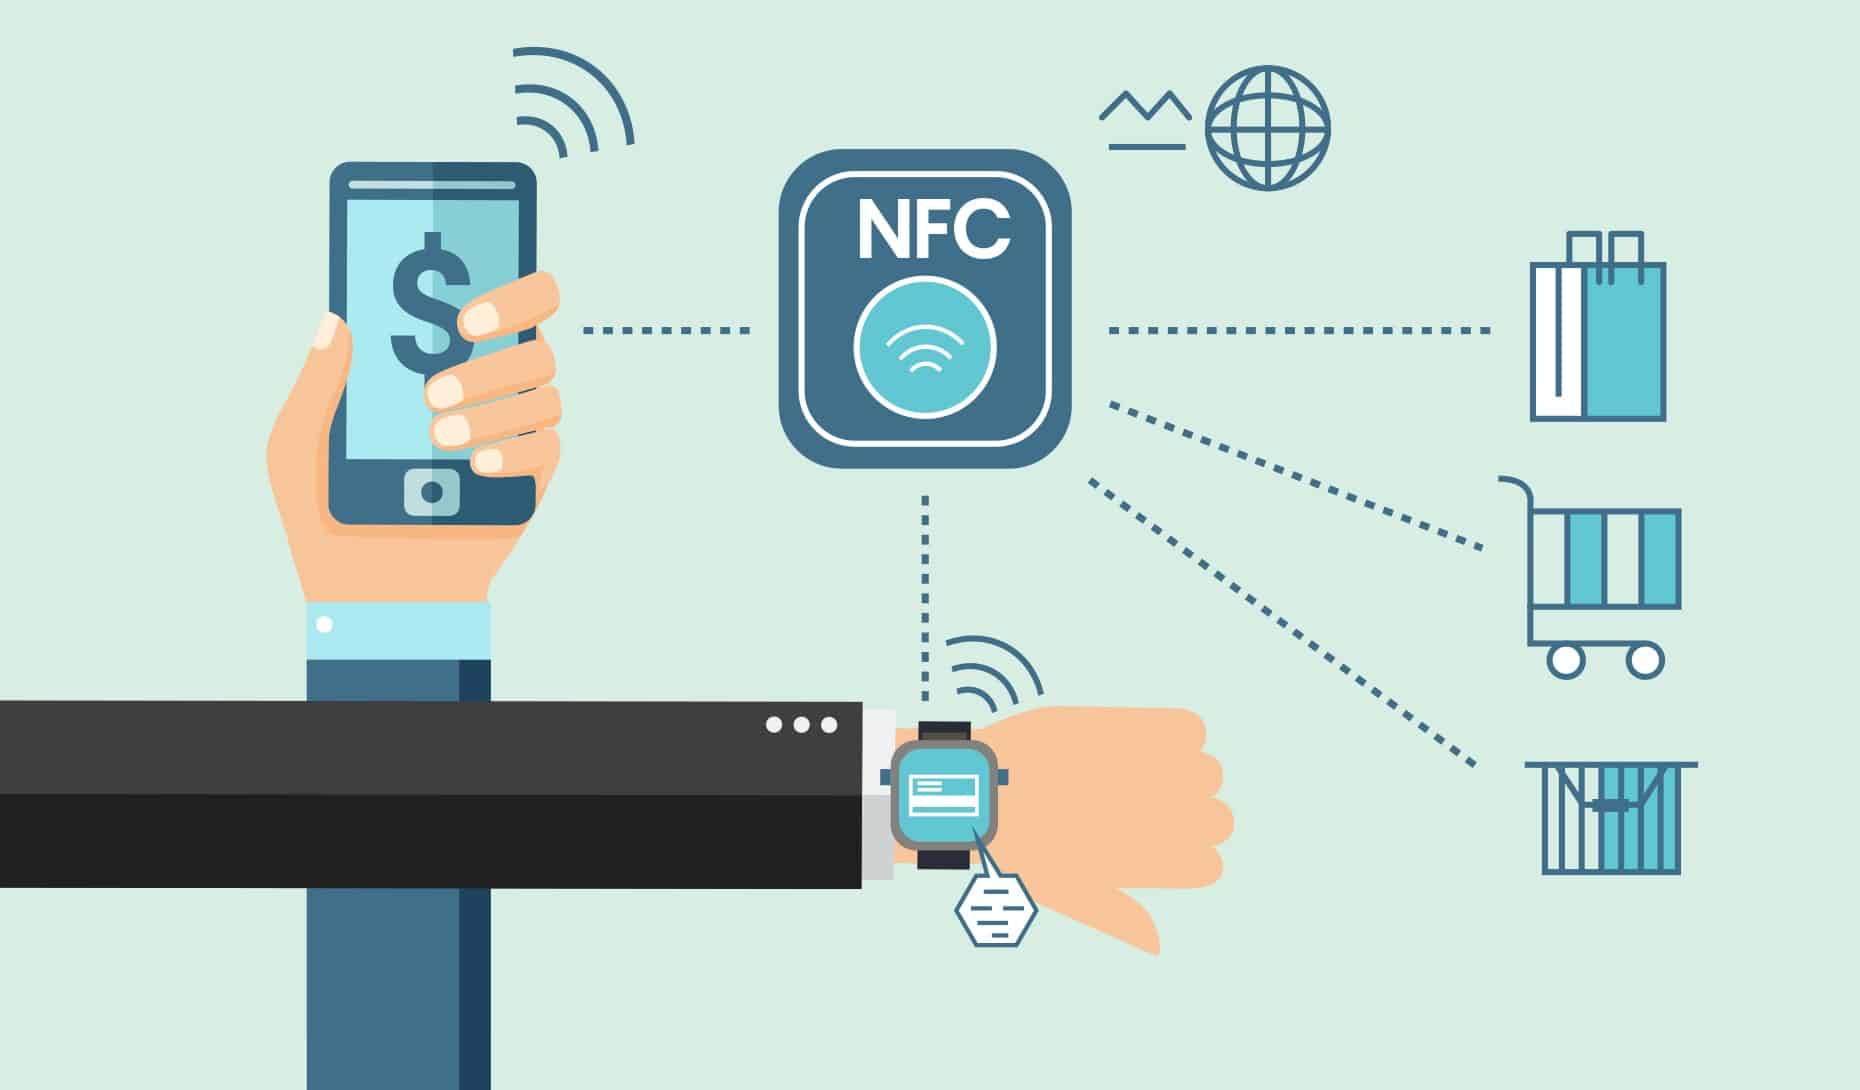 Near Field Communication (NFC)